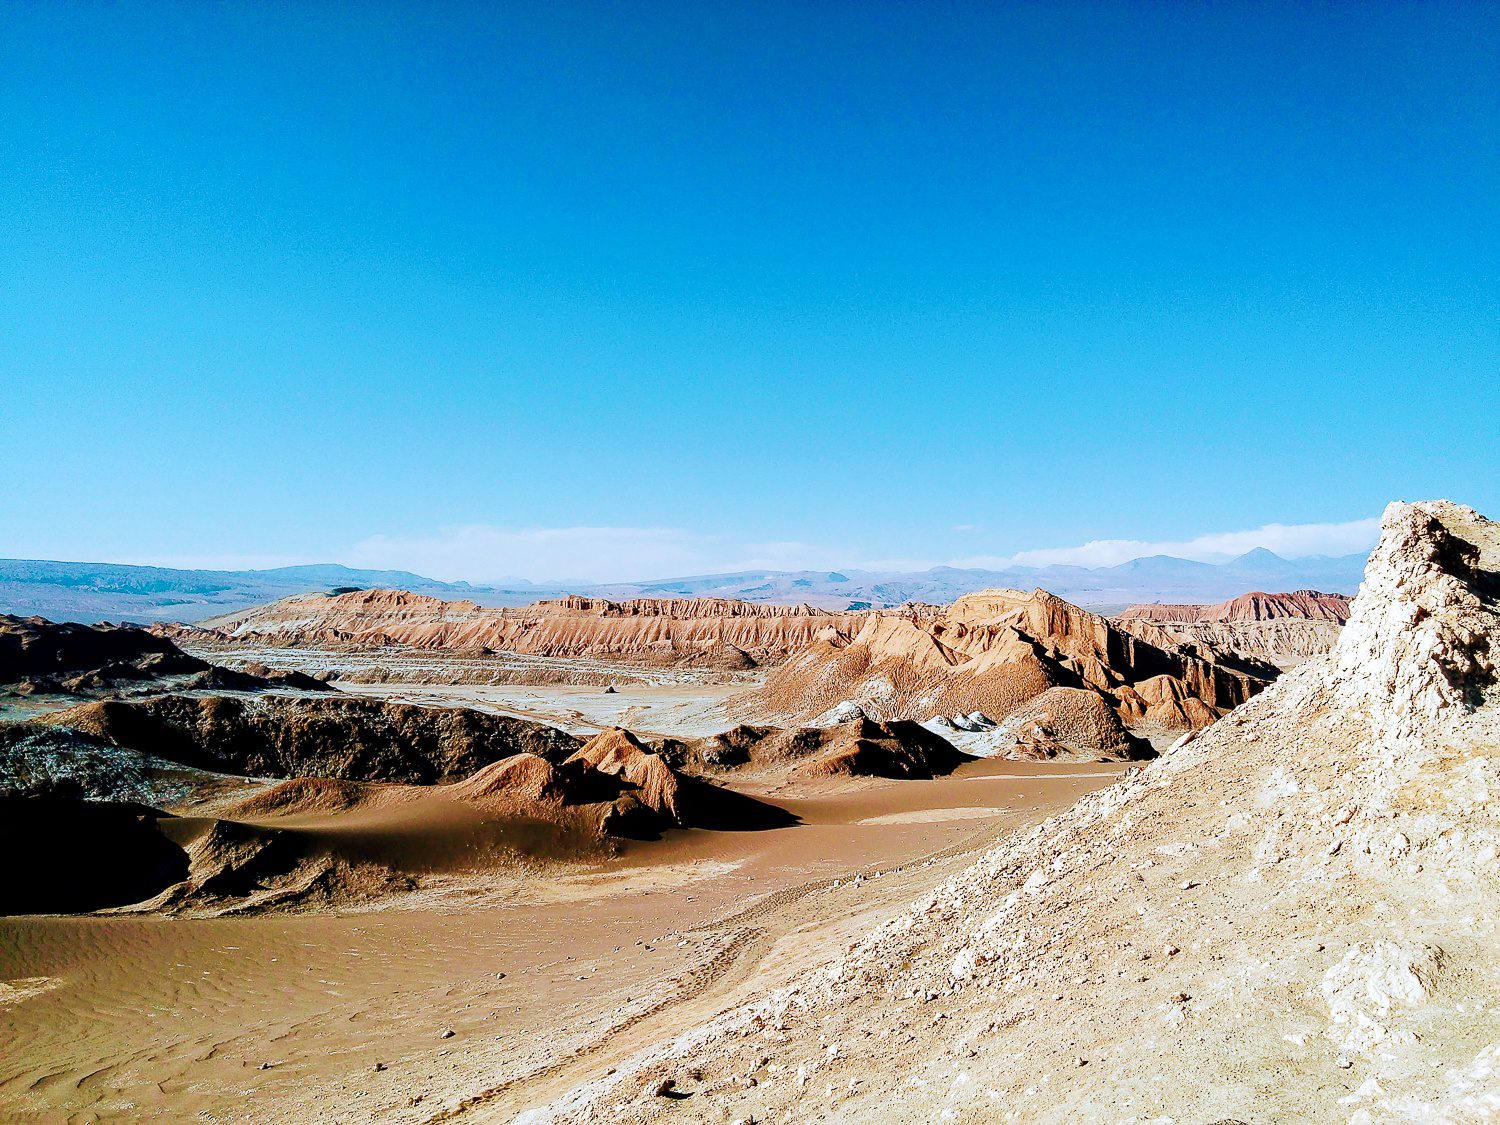 Another view of Chile's arid Atacama Desert.